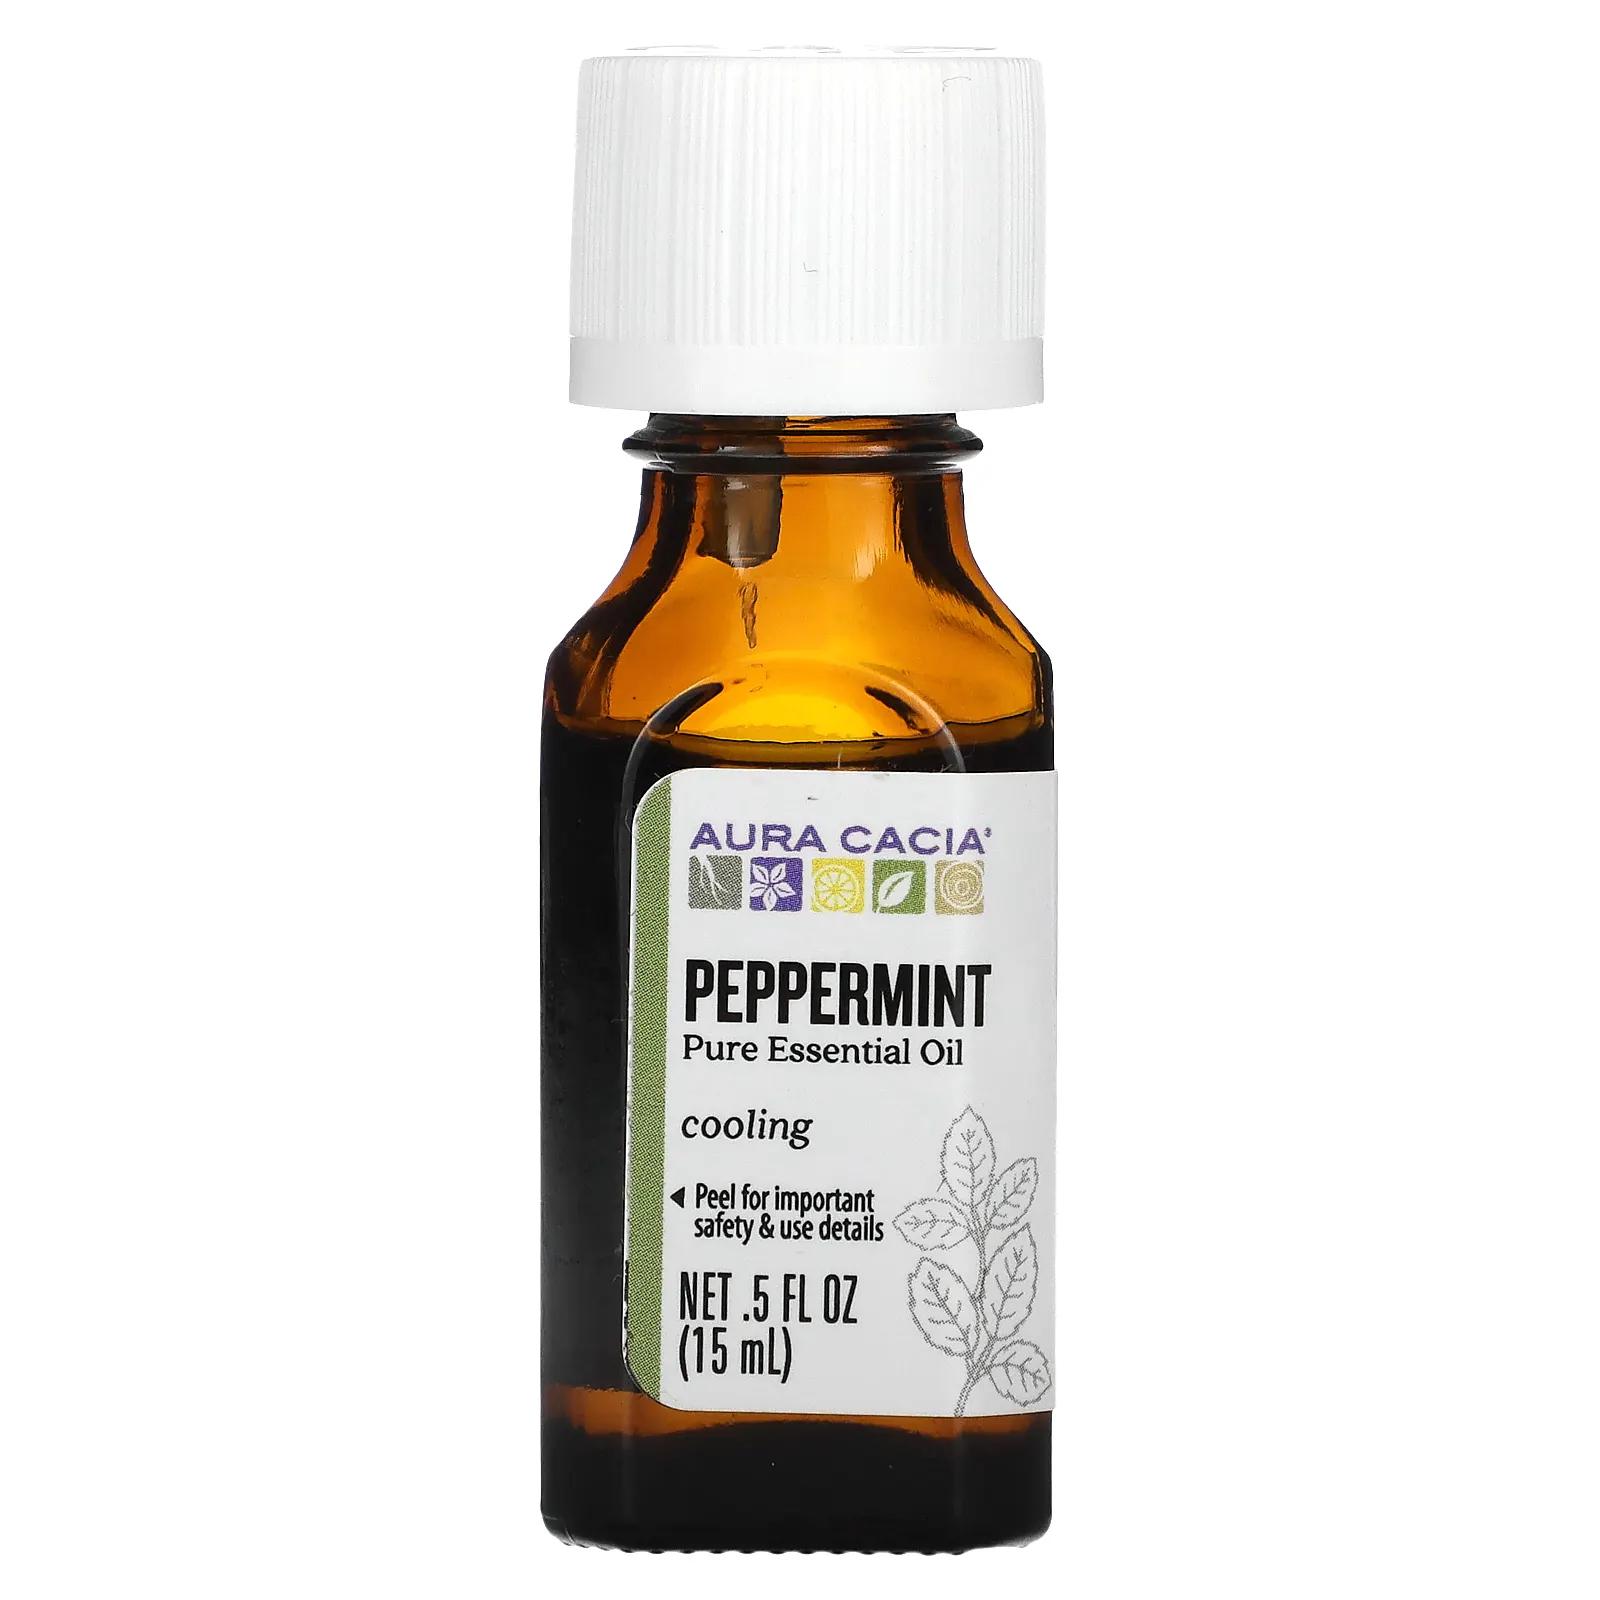 Aura Cacia Pure Essential Oil Peppermint .5 fl oz (15 ml) aura cacia fizzy bath очистительный проход 2 5 унции 70 9 г